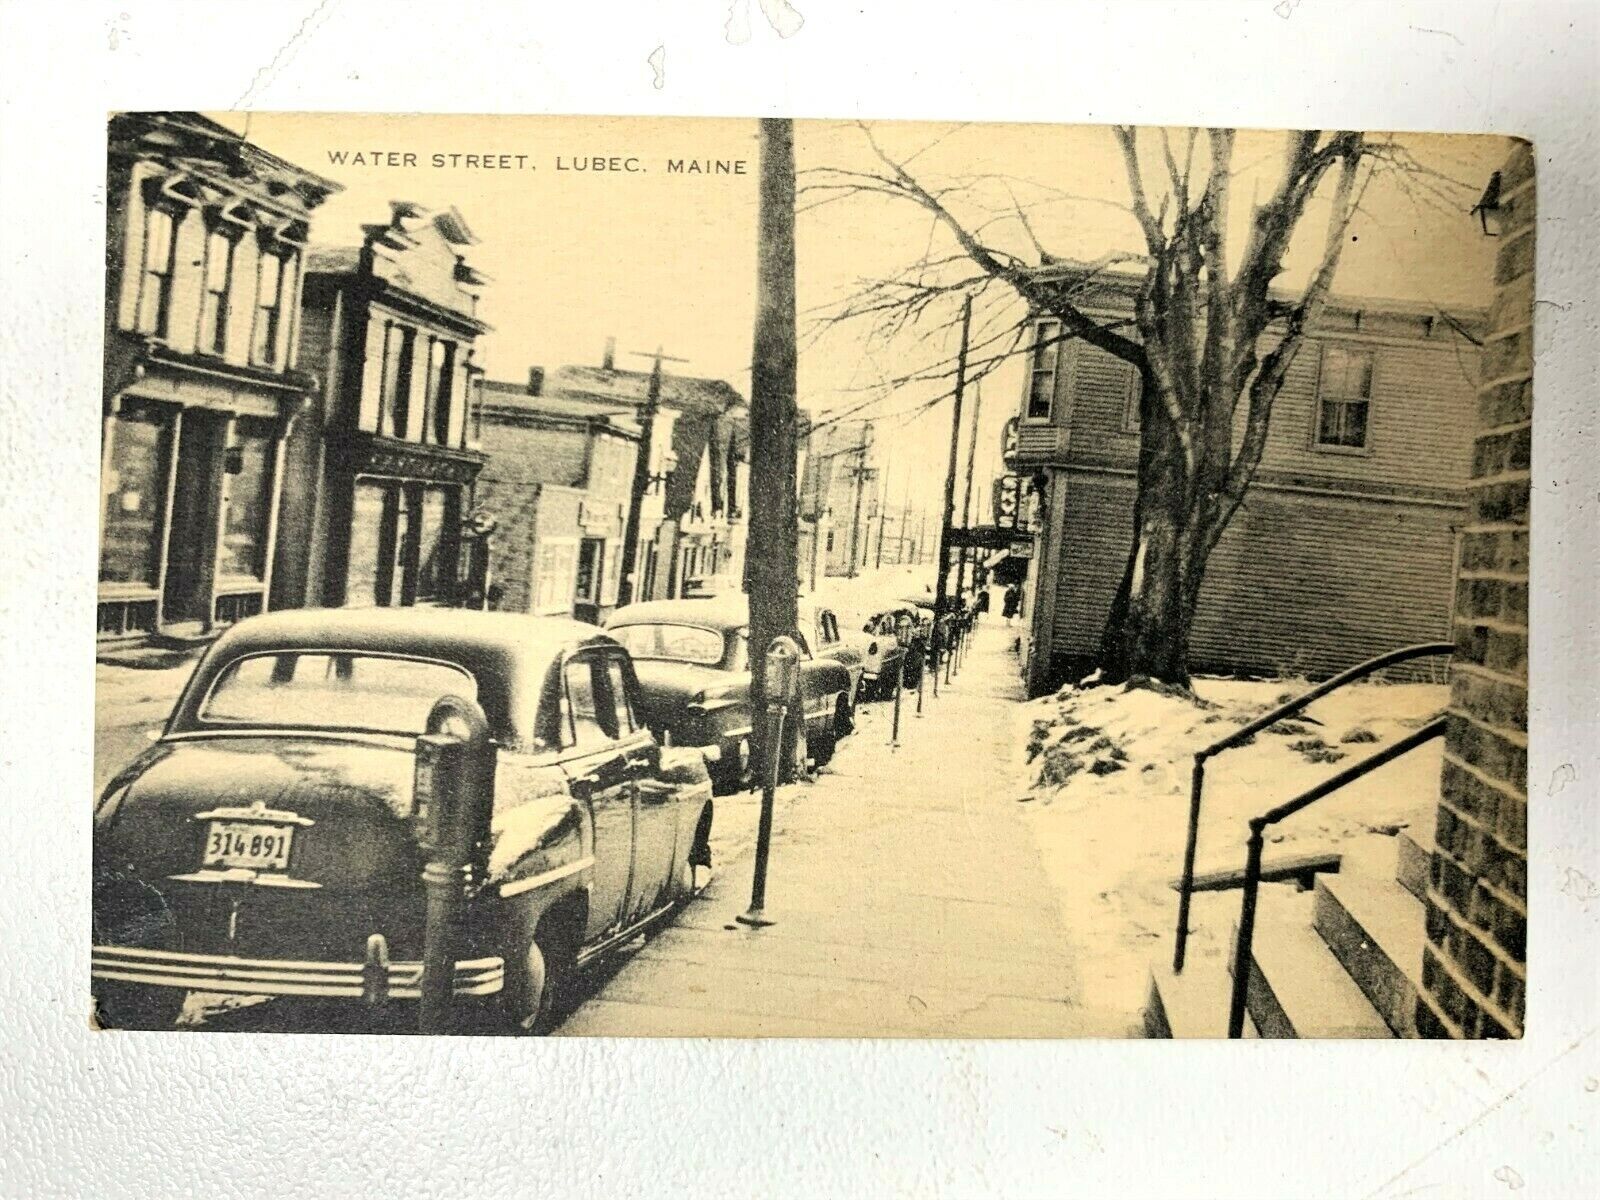 Vintage Postcard Water Street, Lubec Maine, Street View Local Business Buildings